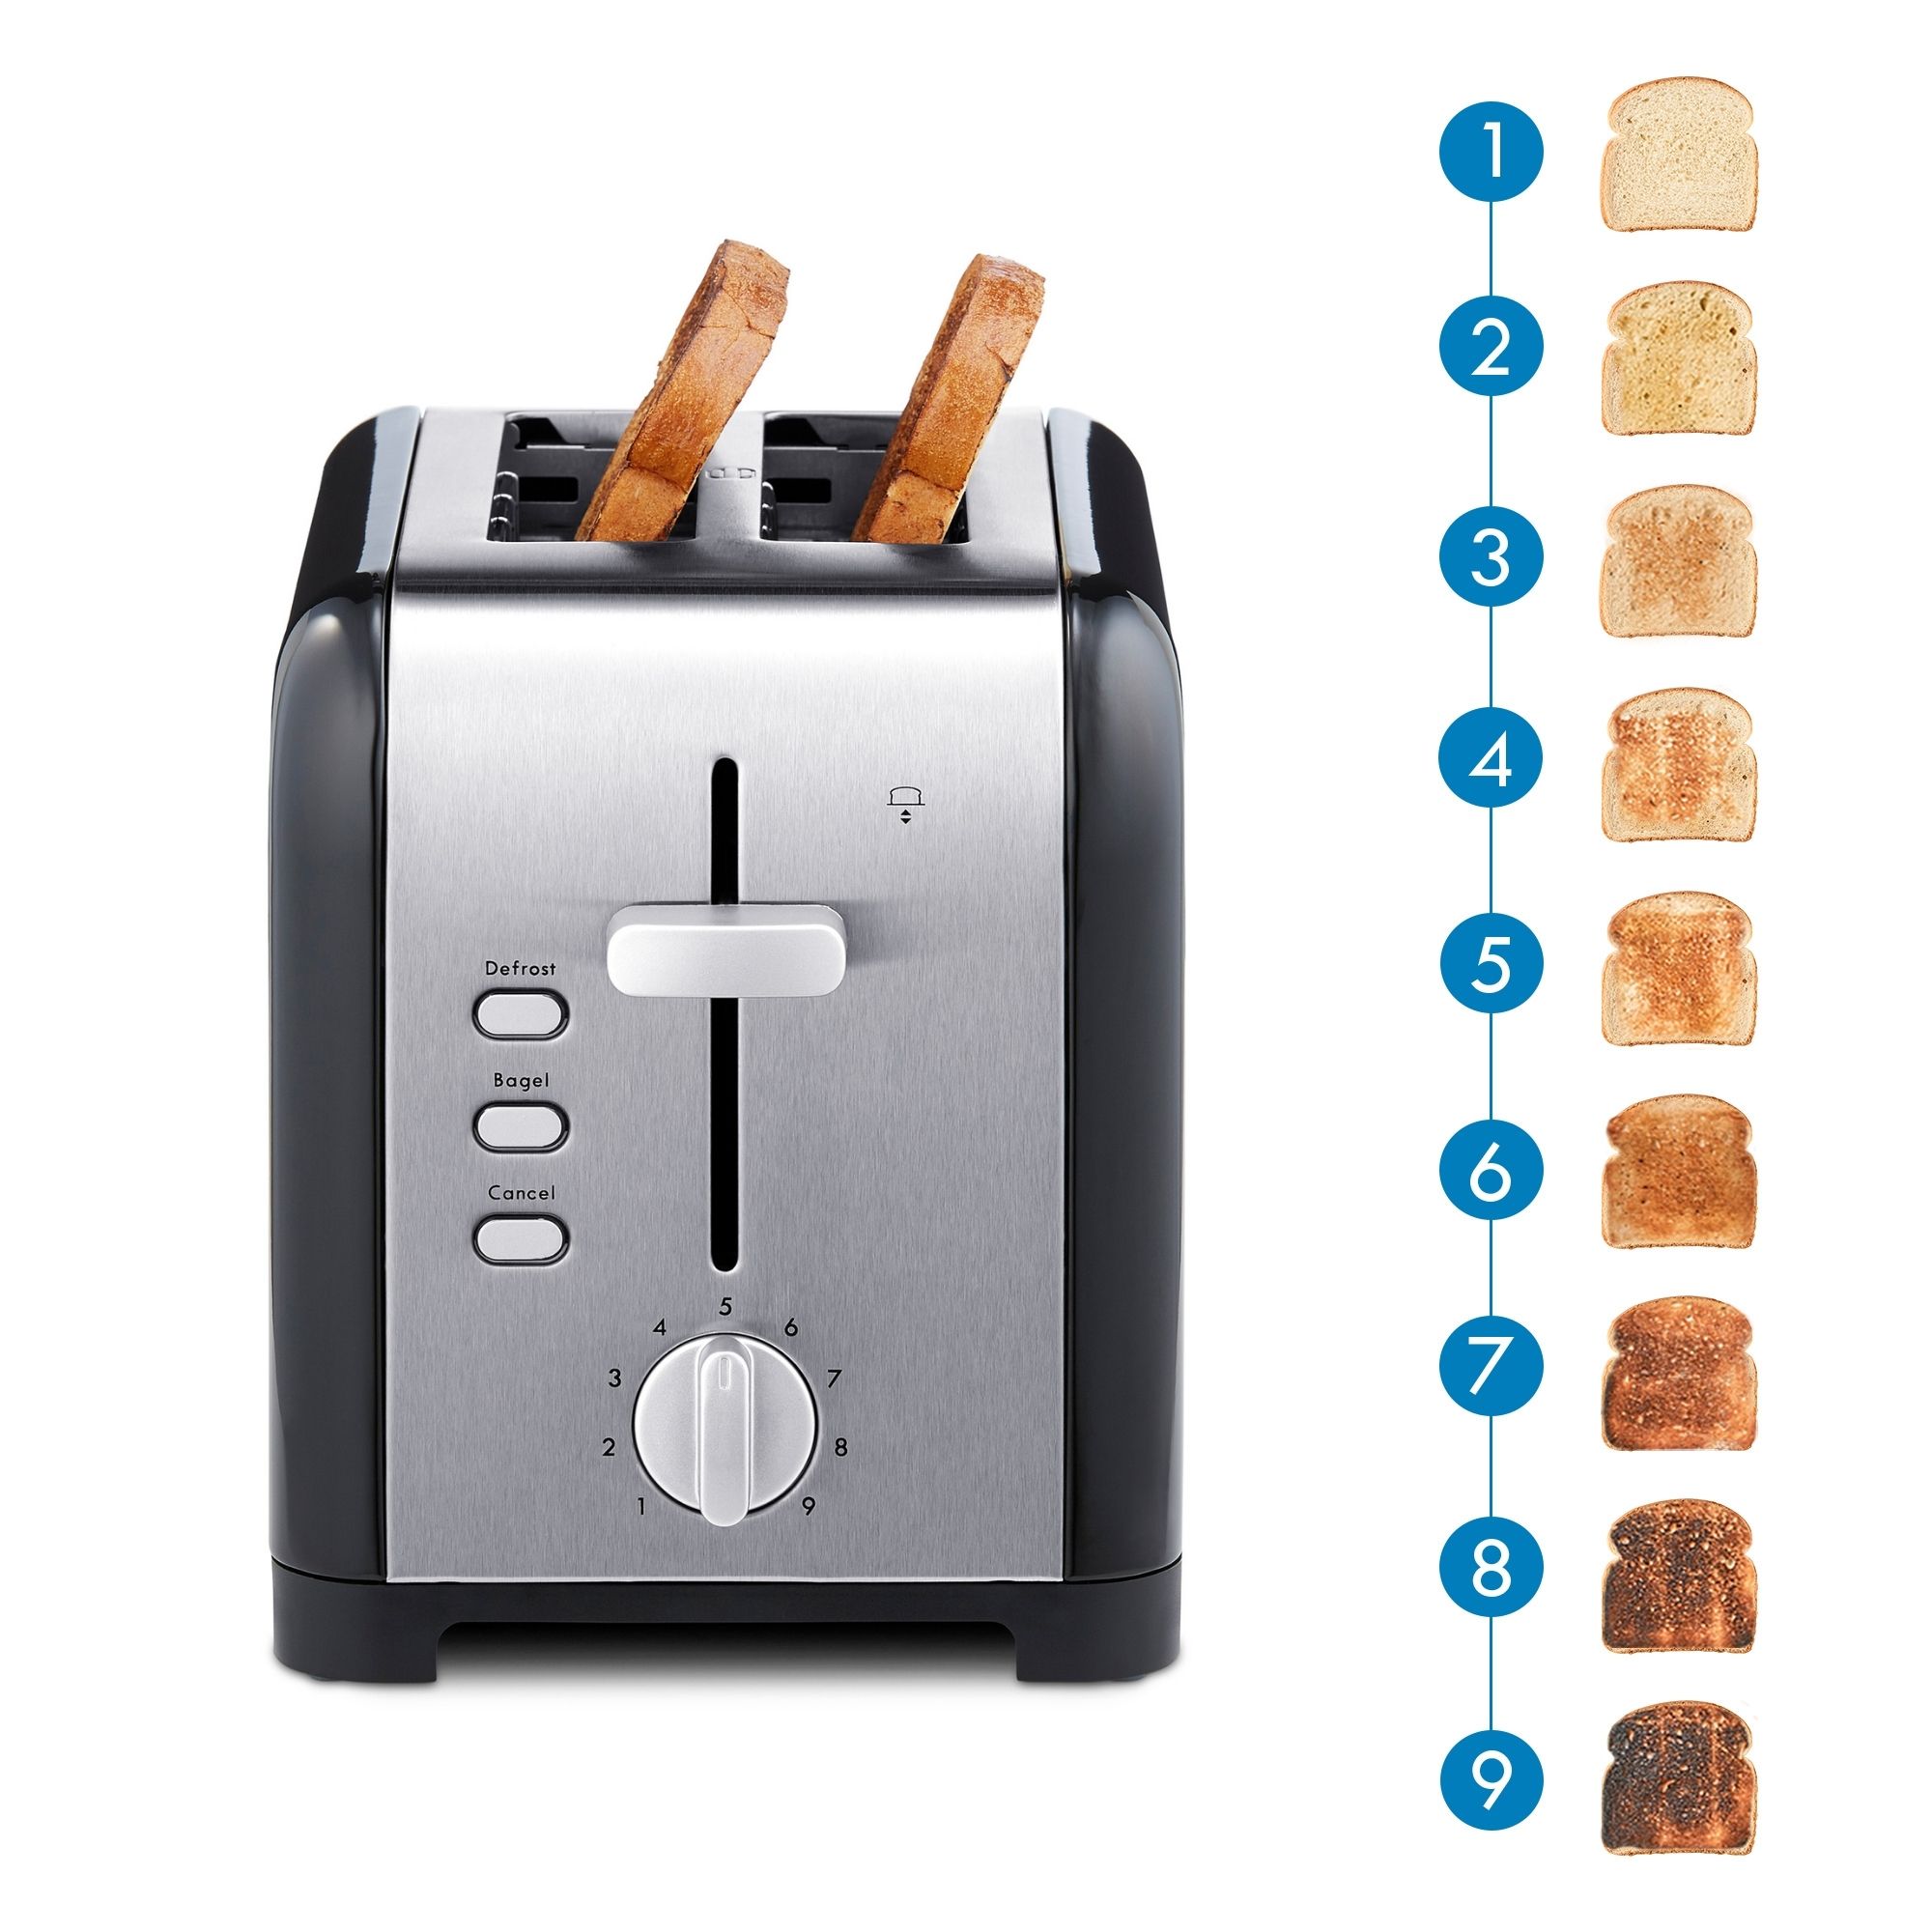 Kenmore 2-Slice Black Stainless Steel Toaster, Wide Slot, Bagel/Defrost